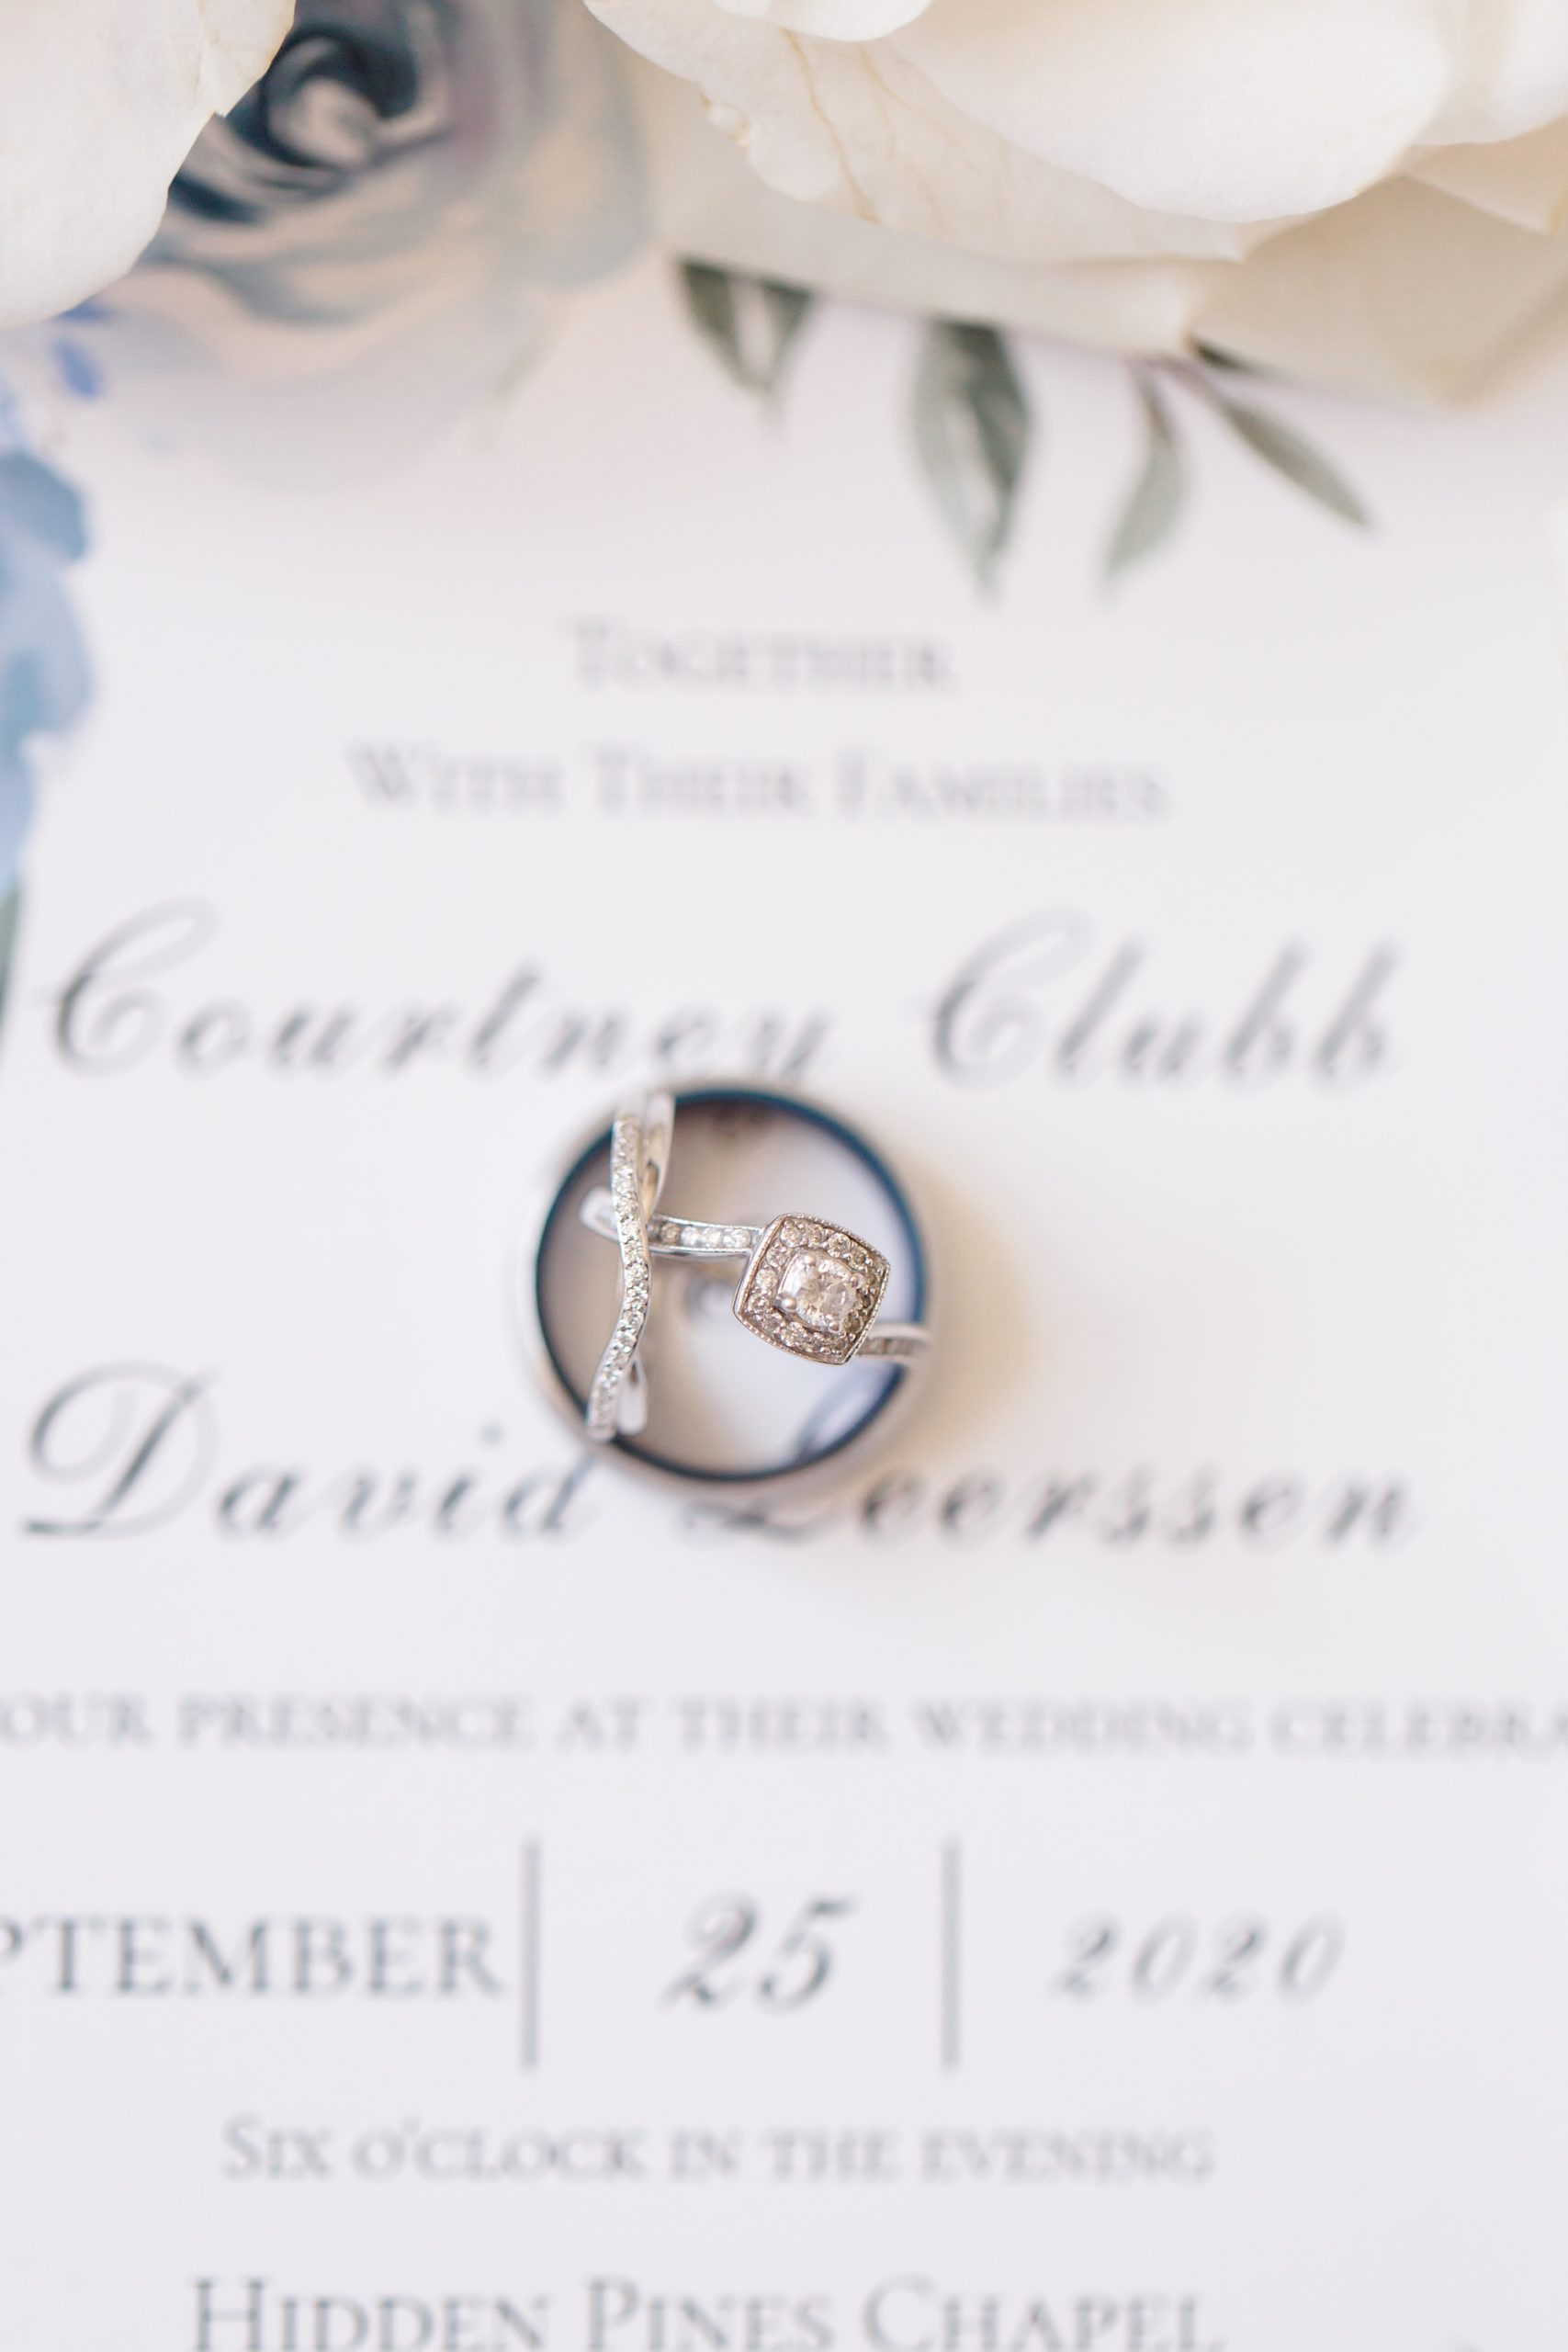 wedding rings rest on invitation for TX wedding